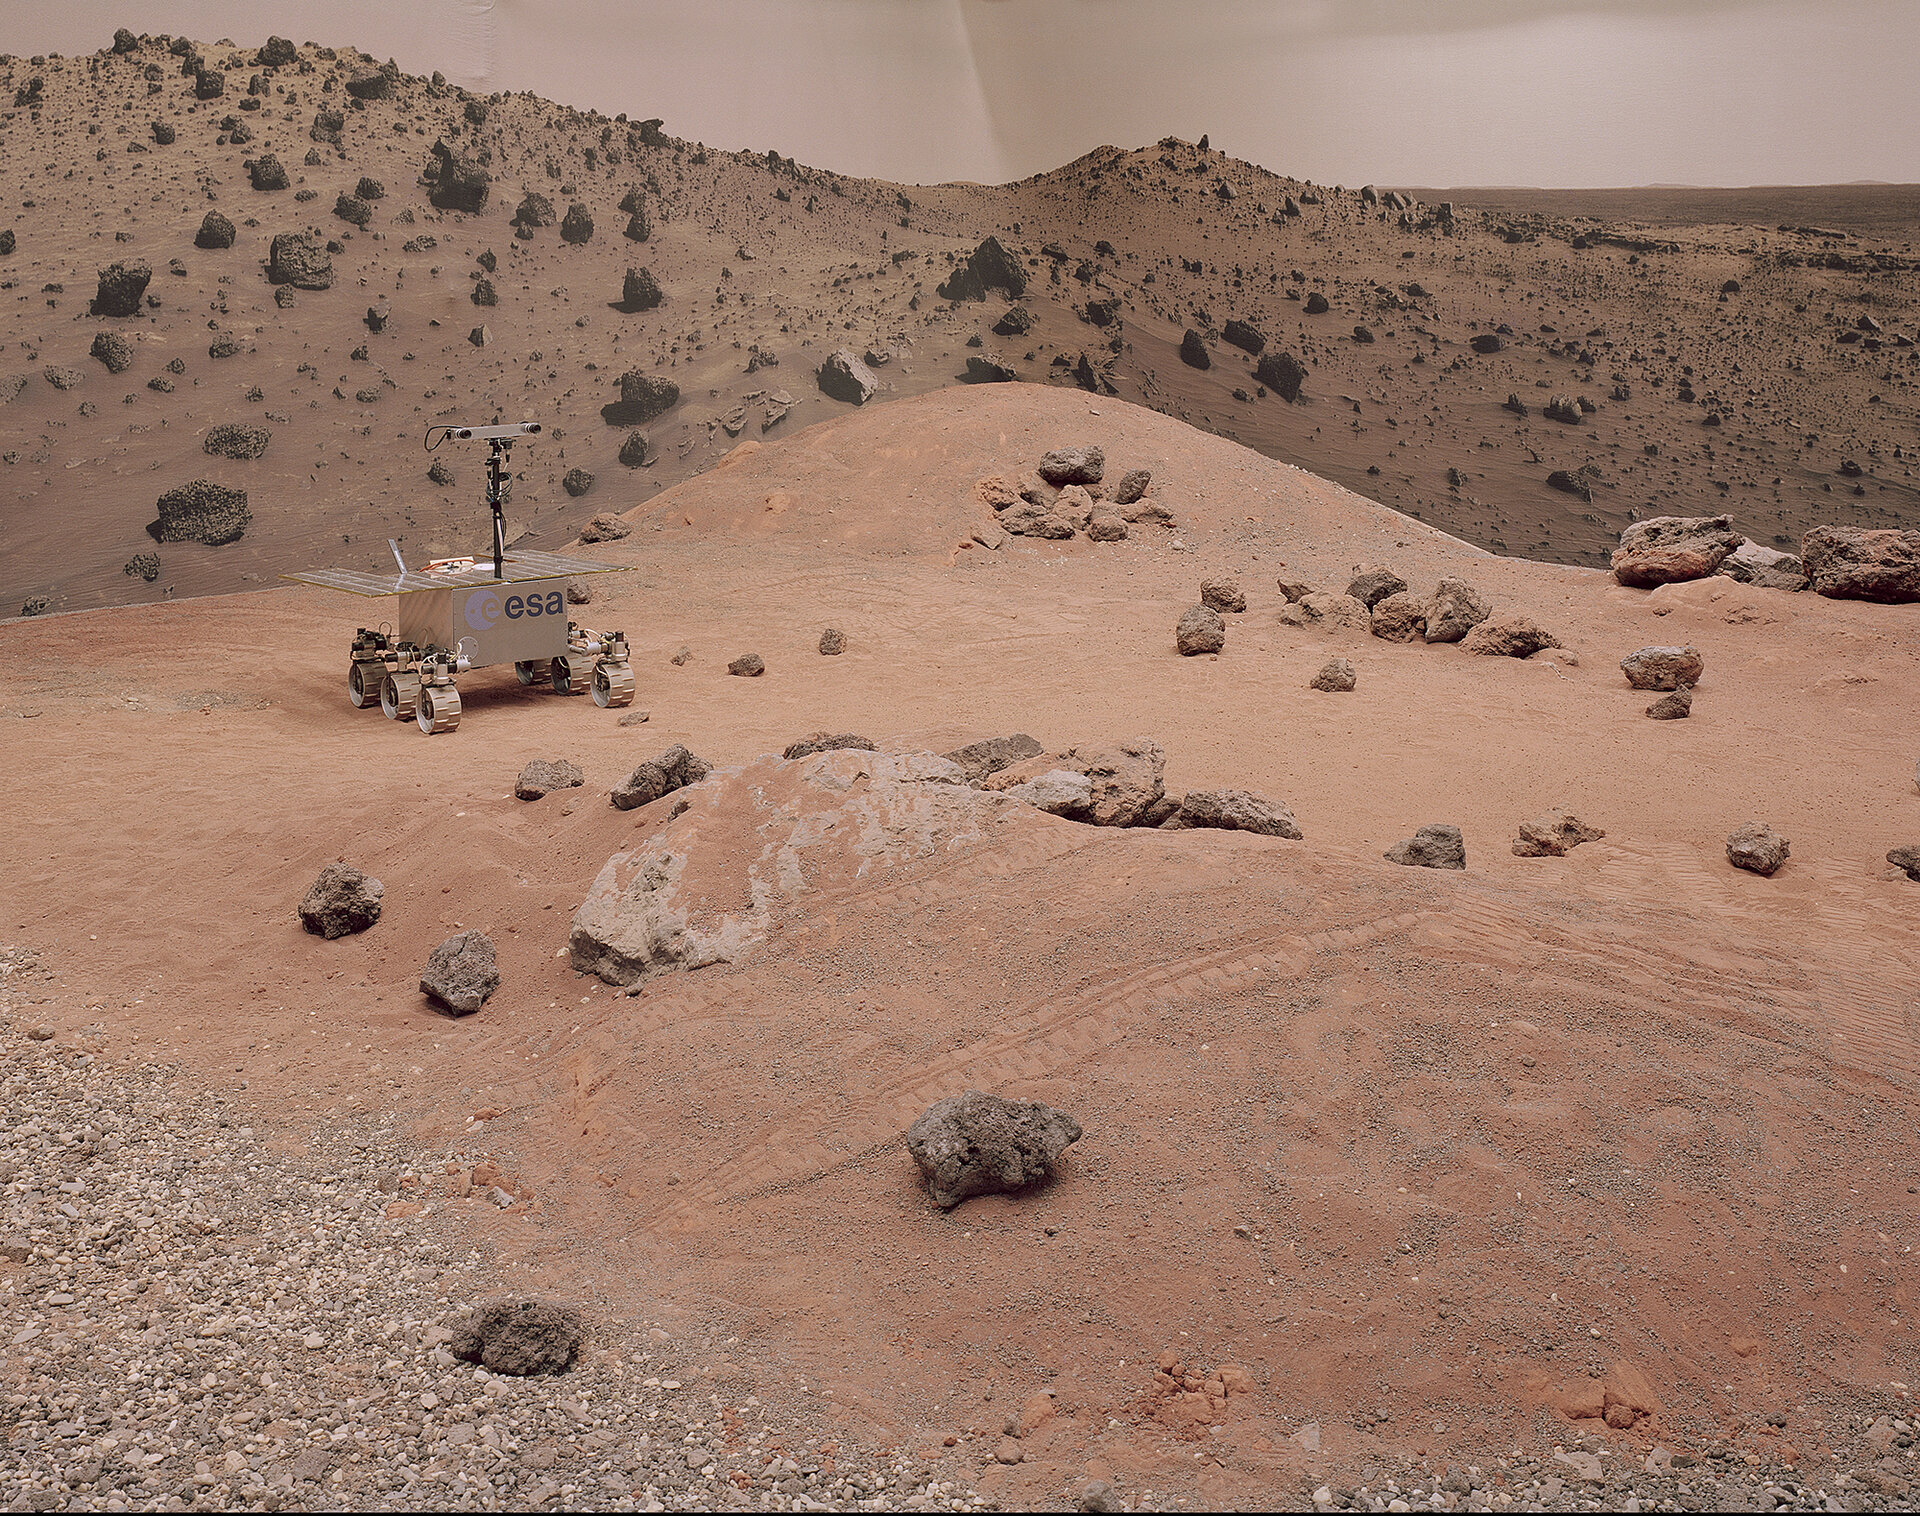 ESA’s Mars Yard photographed by Gregor Sailer